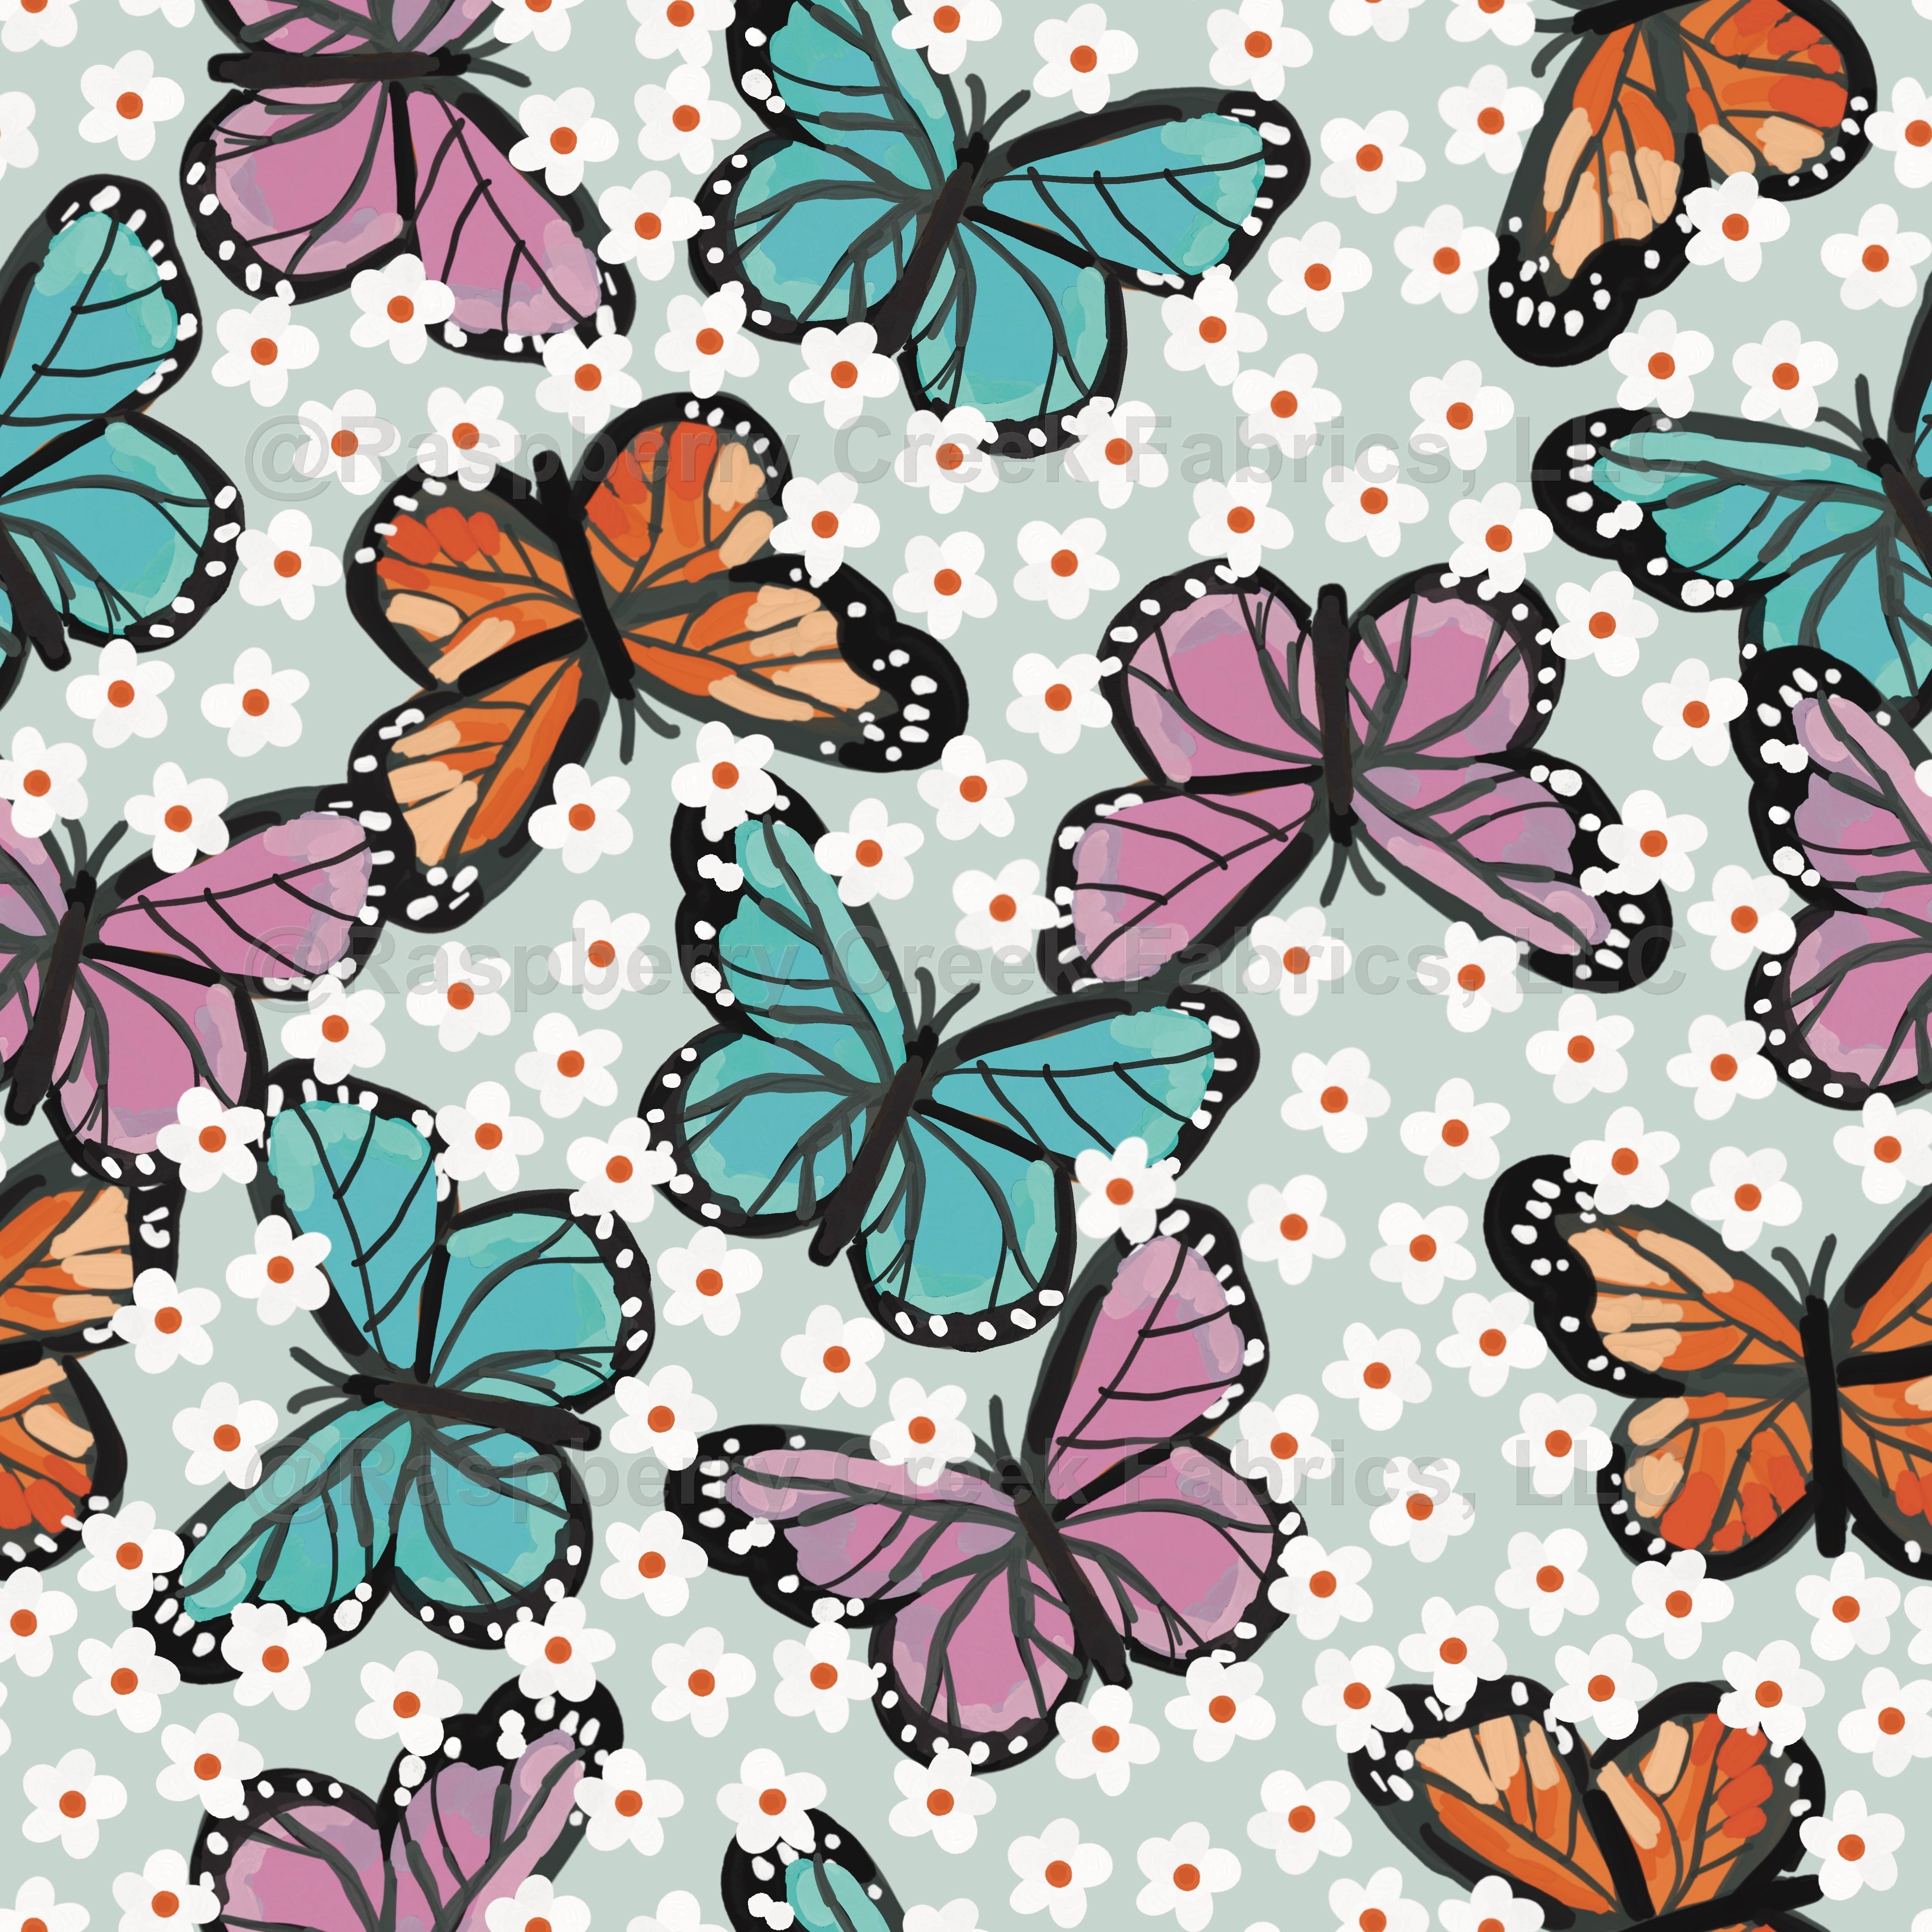 Daisy Butterfly Fabric, Raspberry Creek Fabrics, watermarked